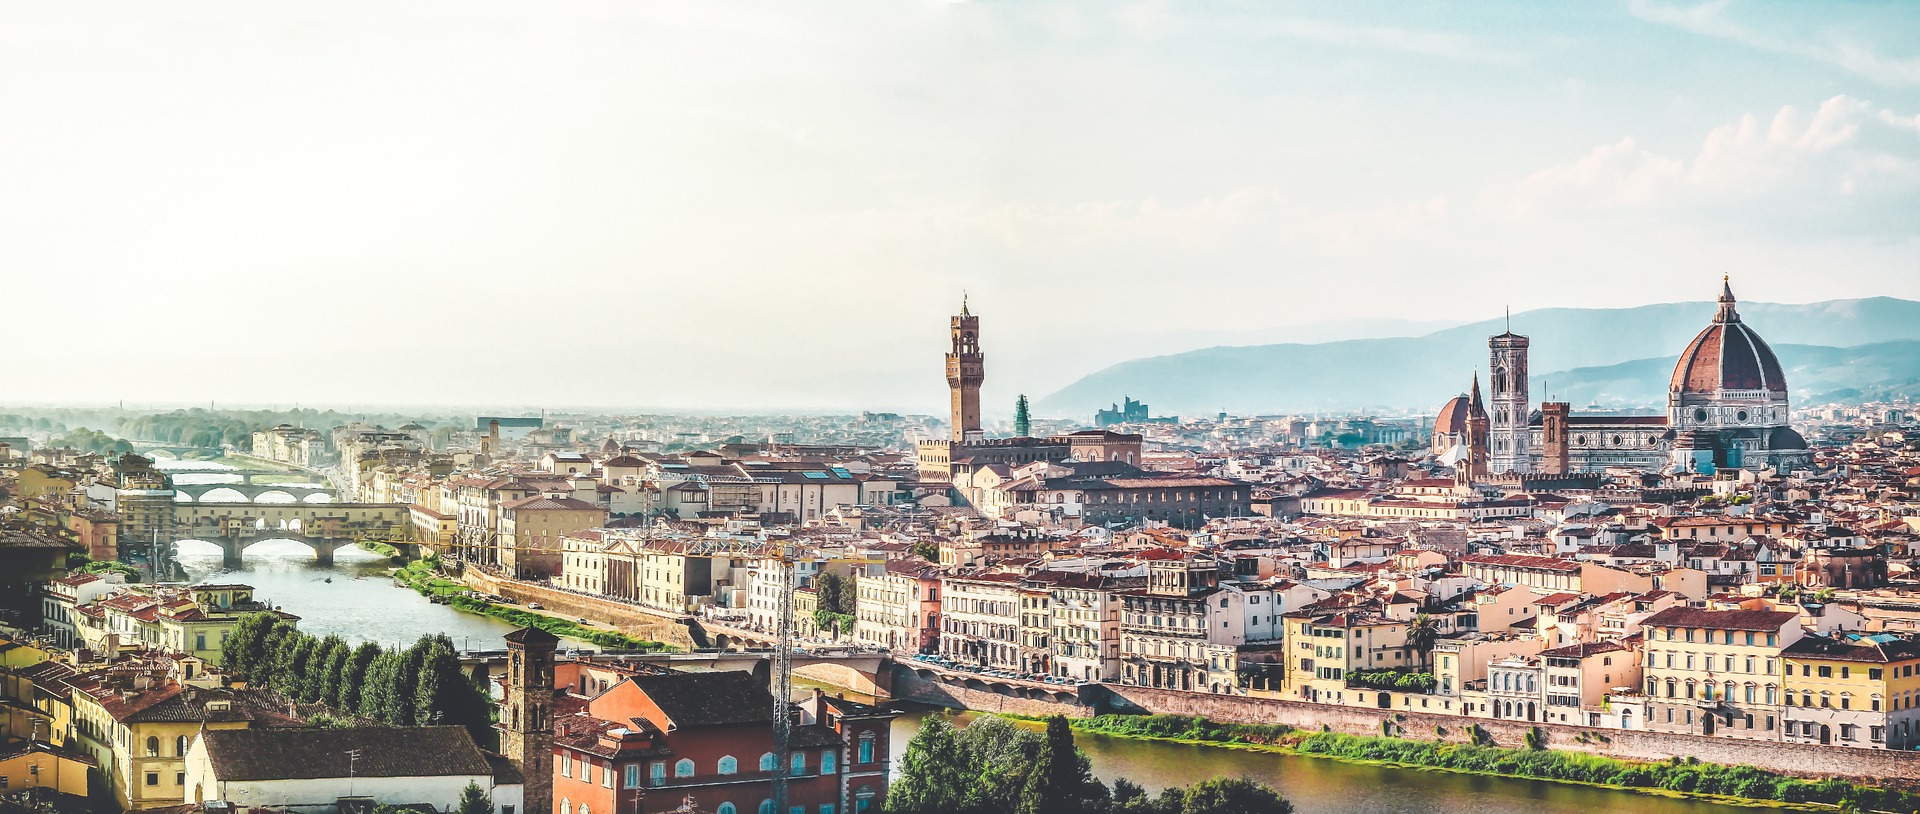 Florence - @schmidt-arts - Pixabay